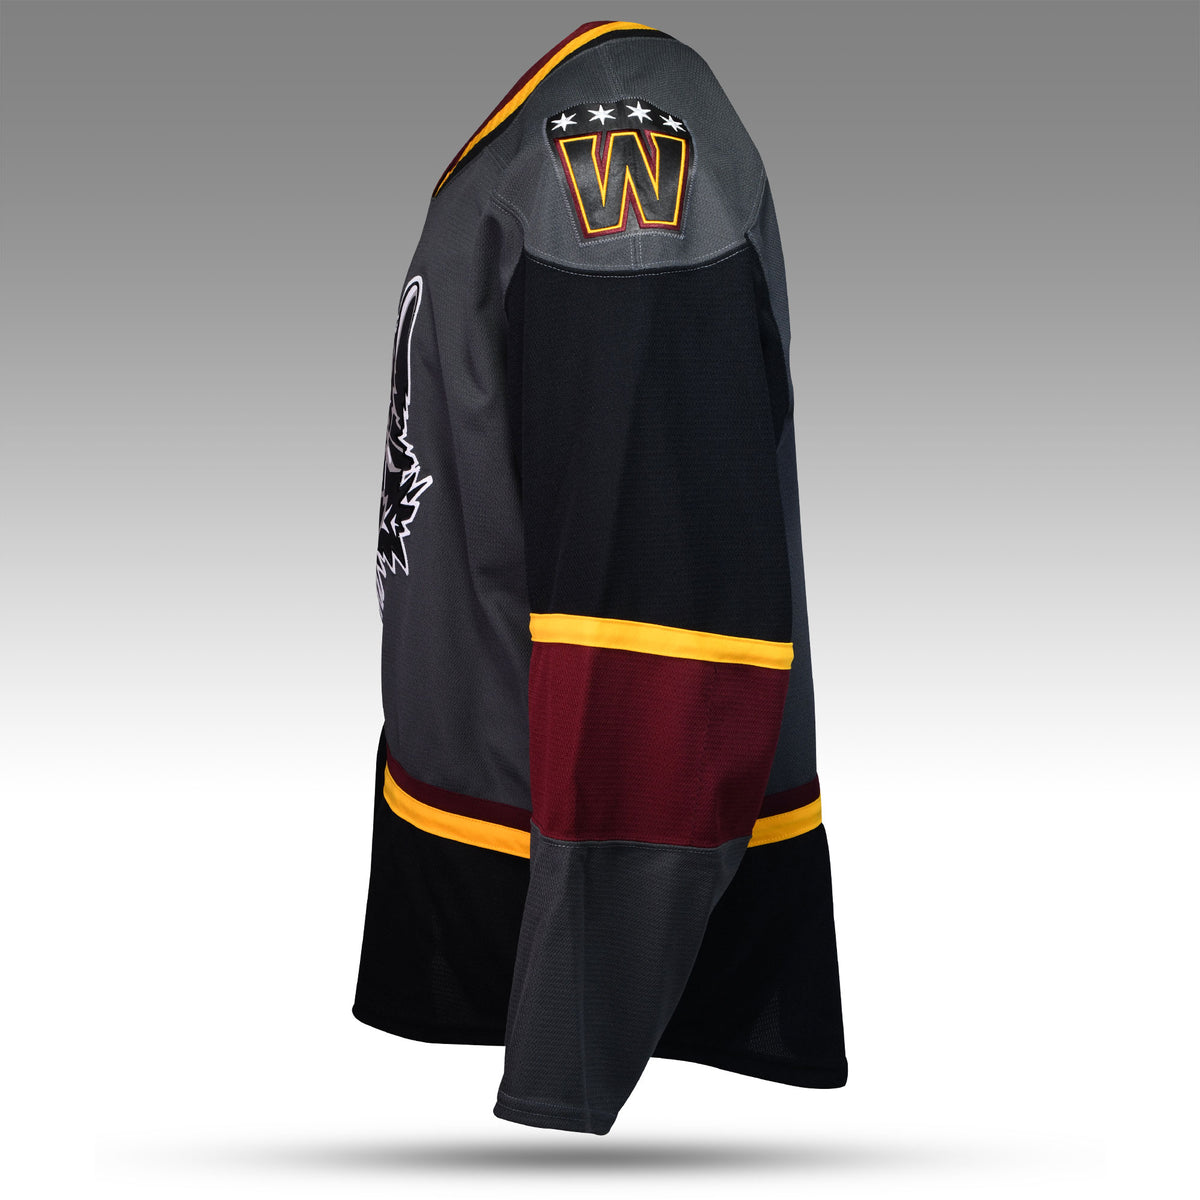 Men's Mighty Ducks Ice Hockey Jersey Stitched Winter Hoodies XXL